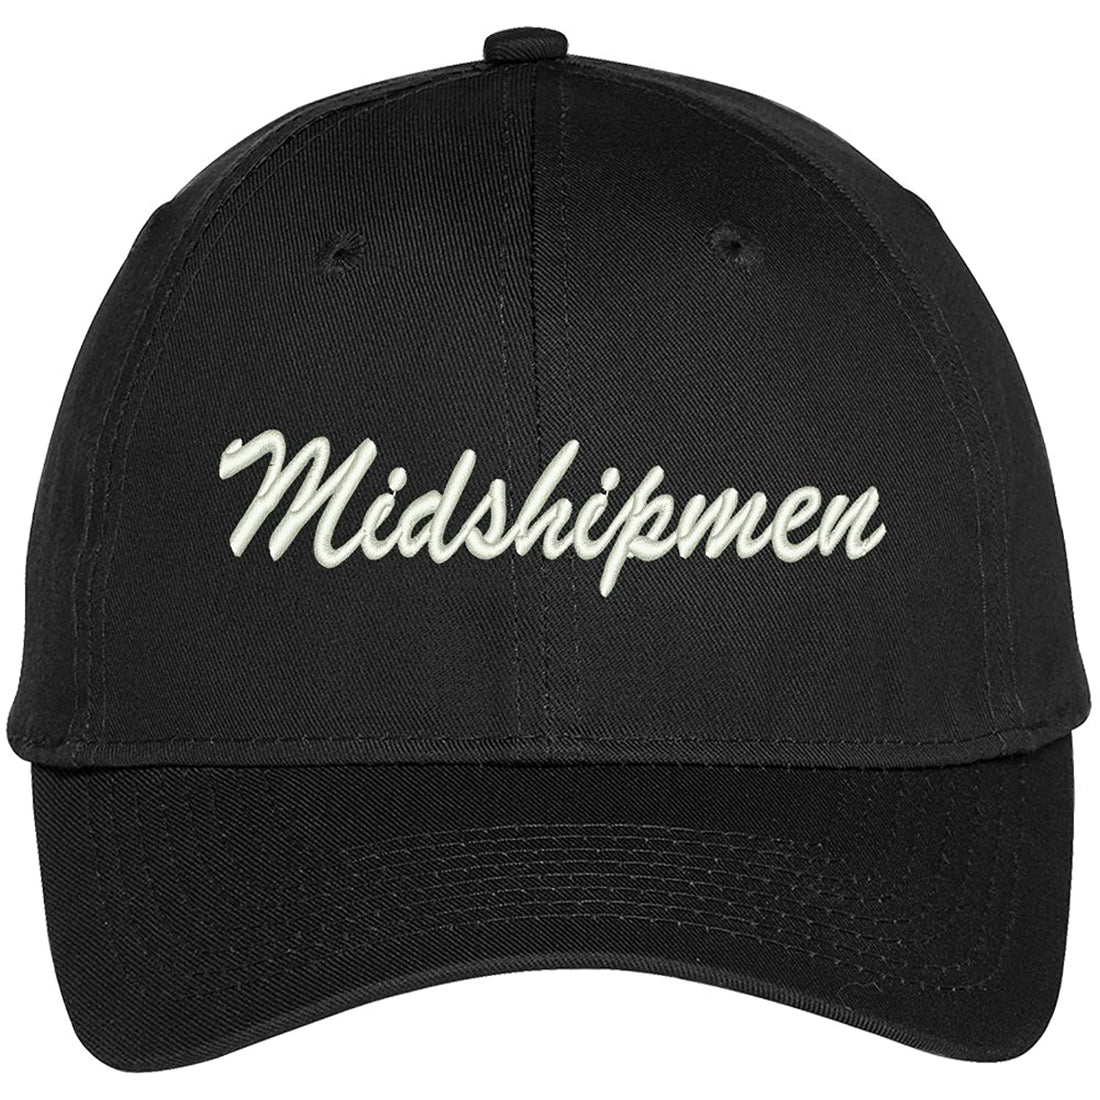 Trendy Apparel Shop Midshipmen Embroidered Team Nickname Mascot Cap